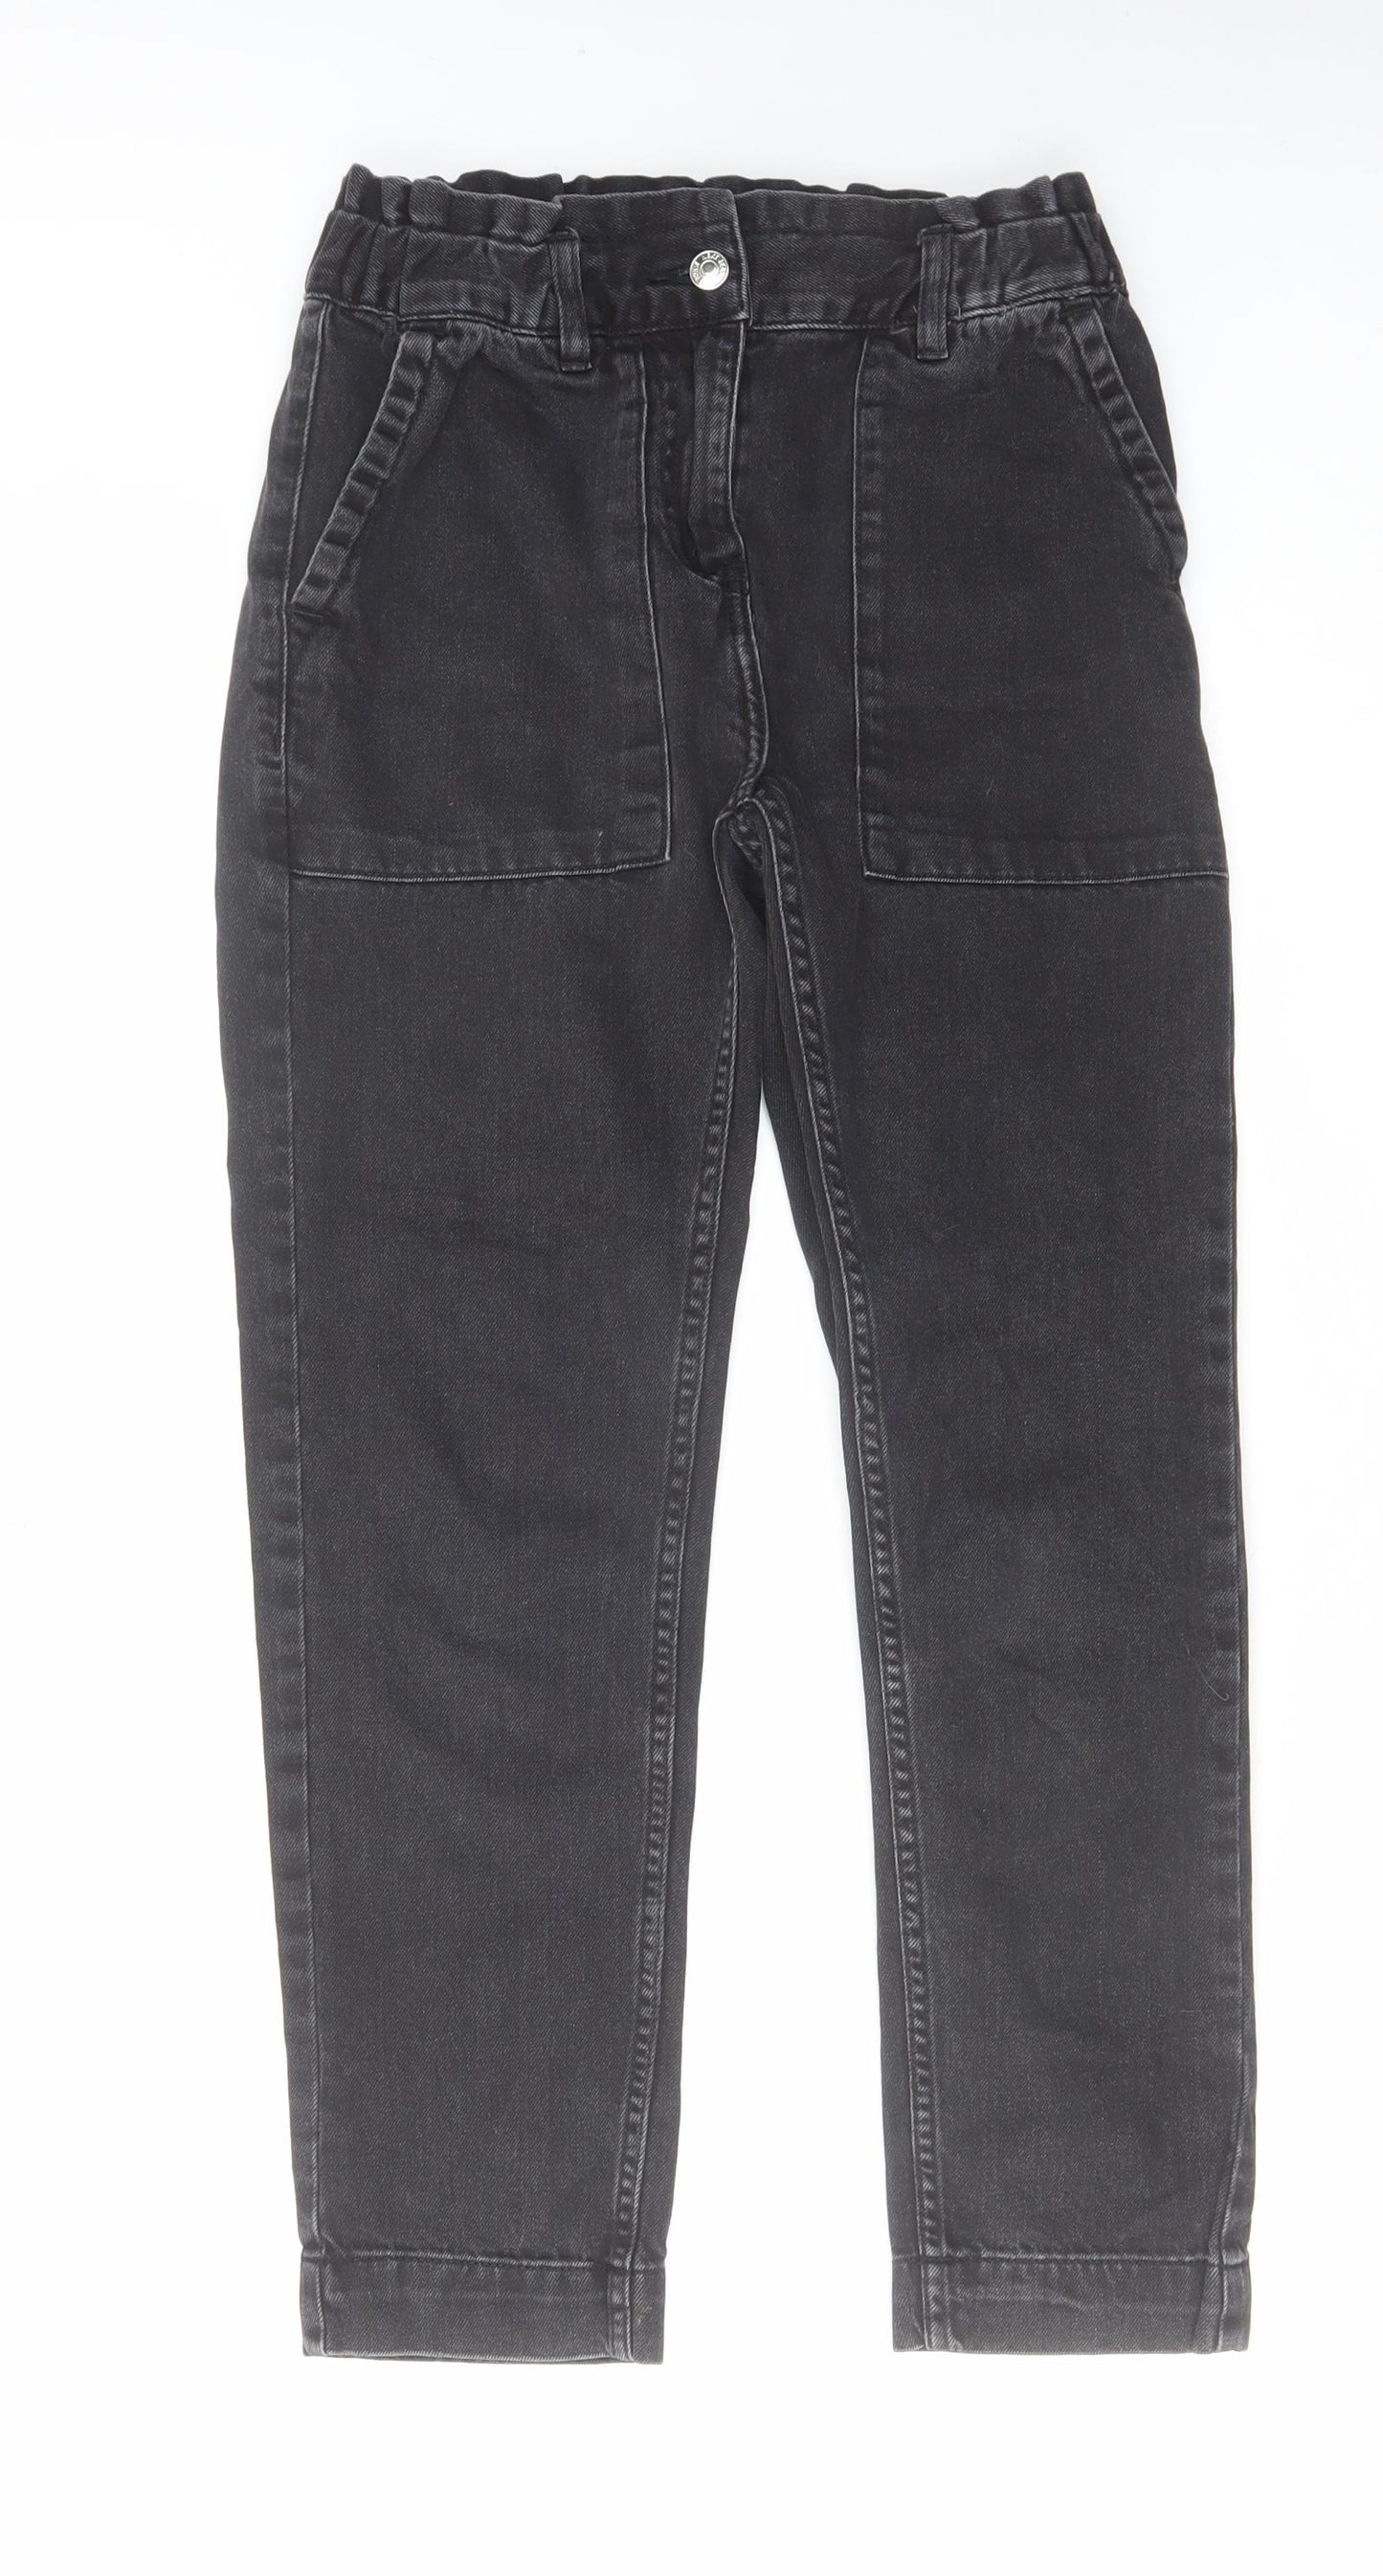 NEXT Womens Black Cotton Straight Jeans Size 6 L26 in Regular Zip